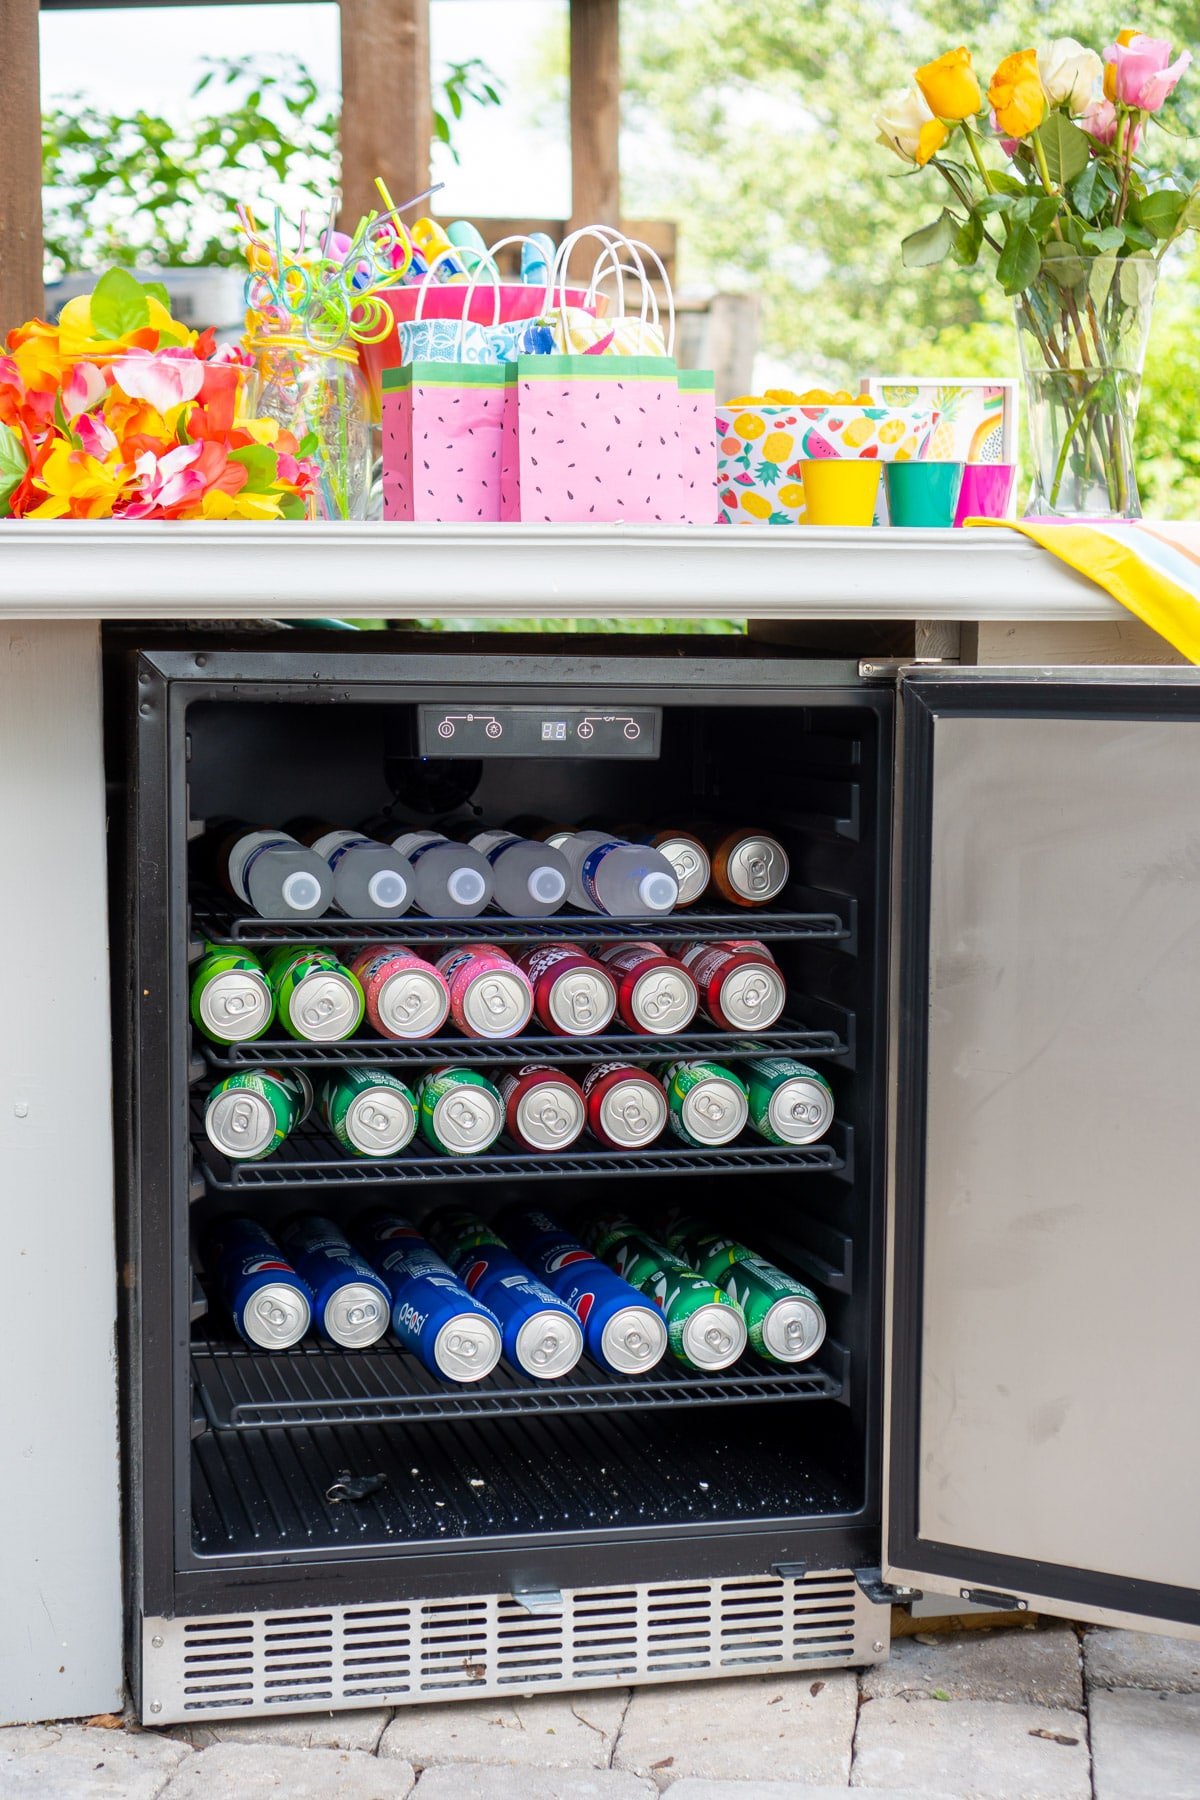 Drinks inside a Newair beverage fridge